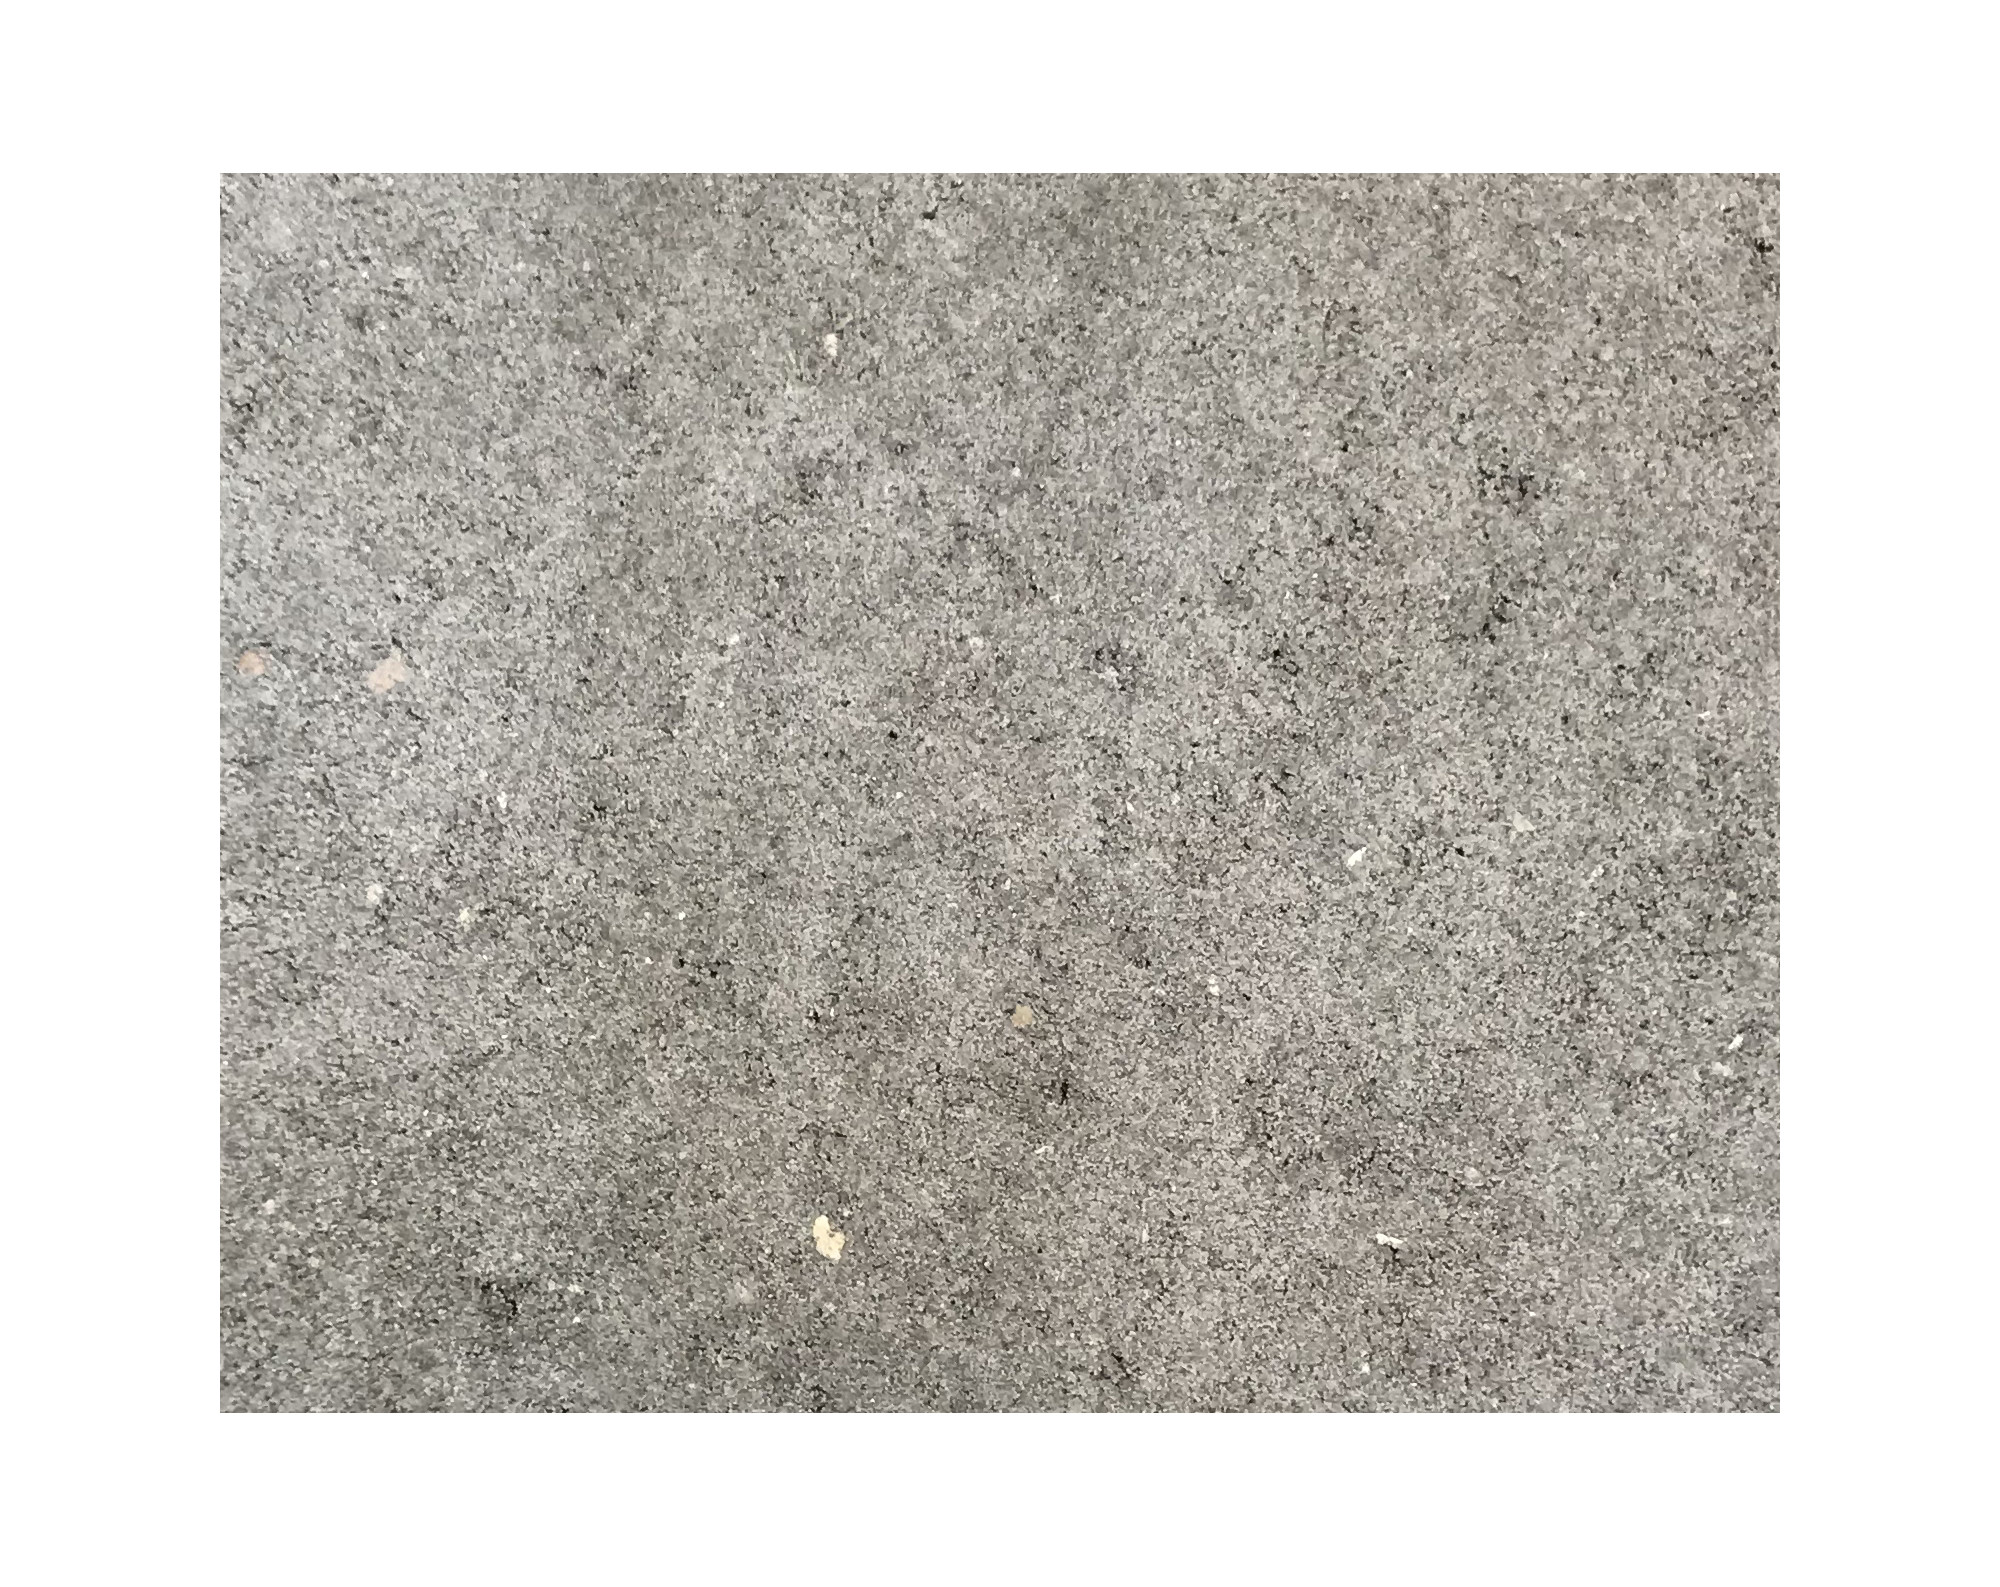 Harmo roc nevadaset, rustica-serie, ovaal d:5,00mx9,00m, grijs, beton